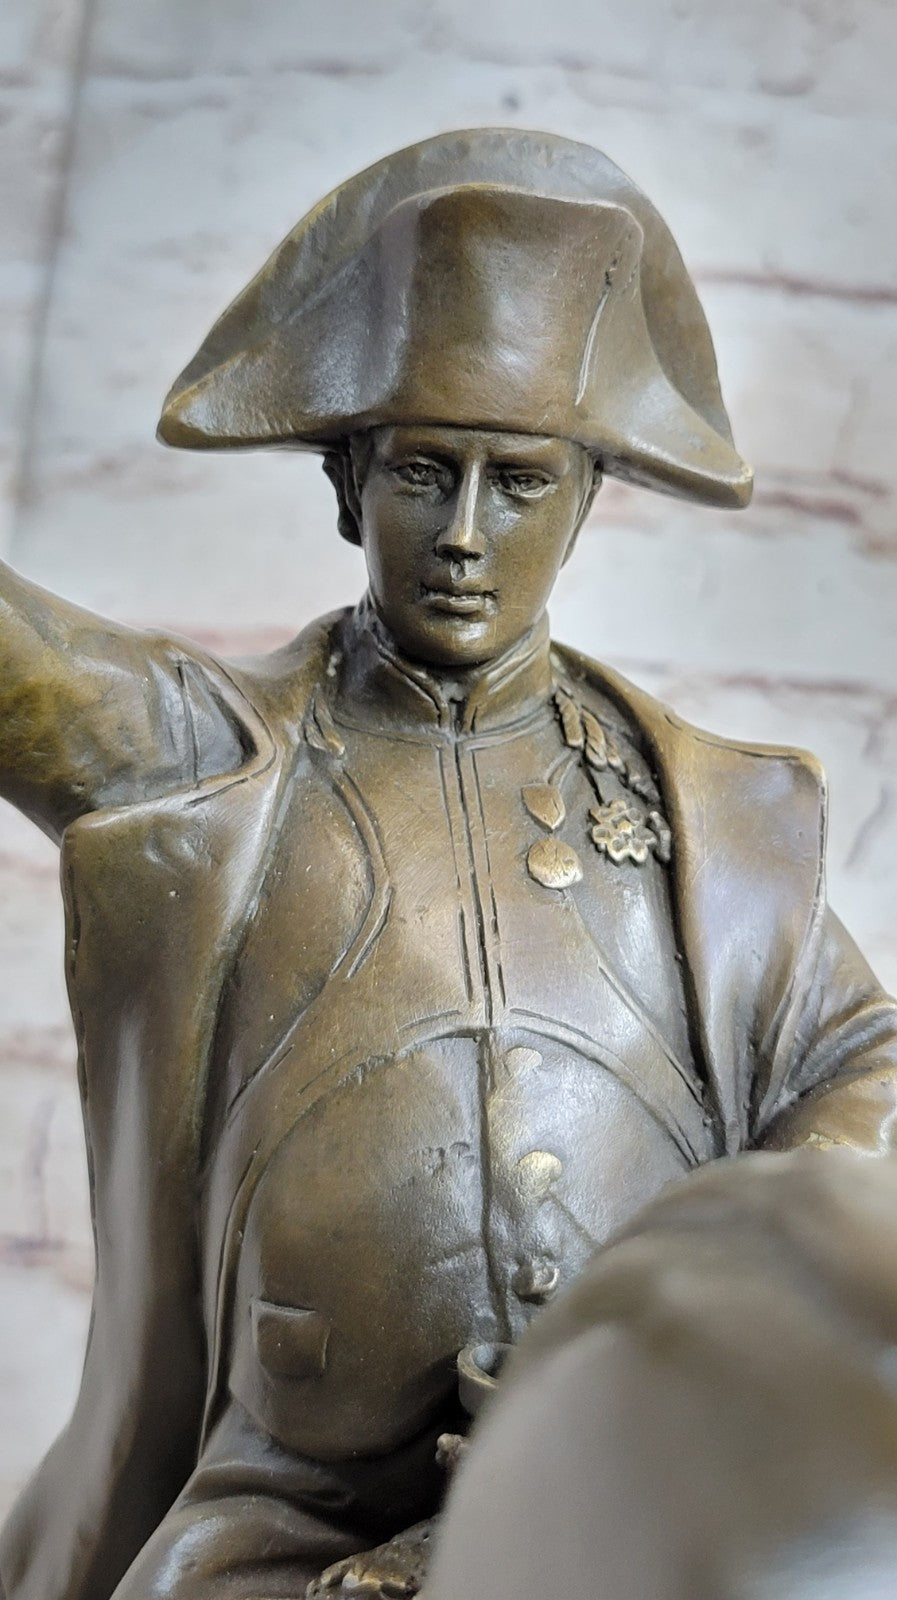 Bronze Sculpture 22 LBS Napoleon Bonaparte French Emperor Soldier Figurine Sale